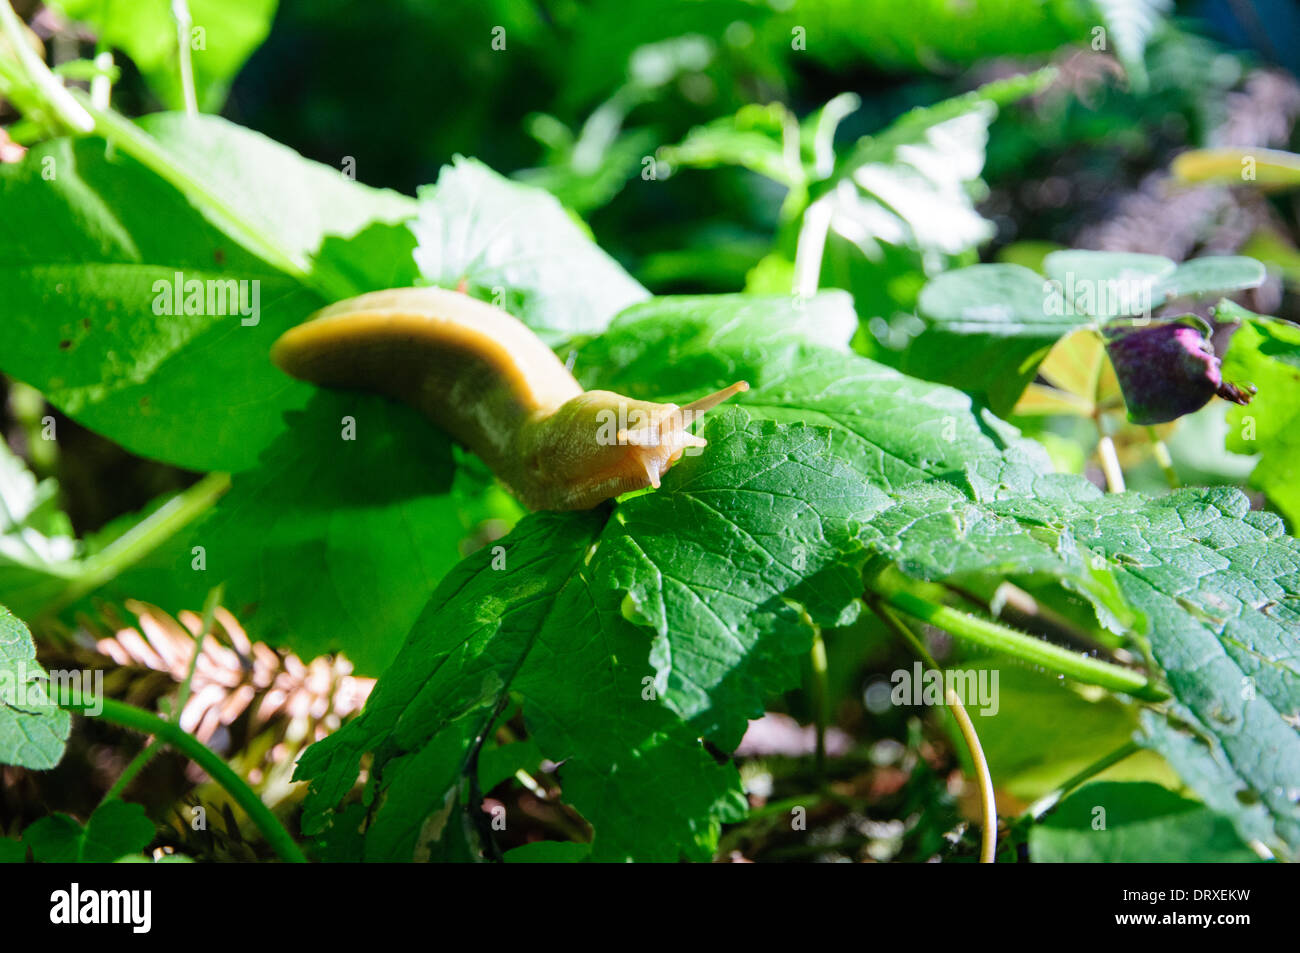 Yellow banana slug on green leaf Stock Photo